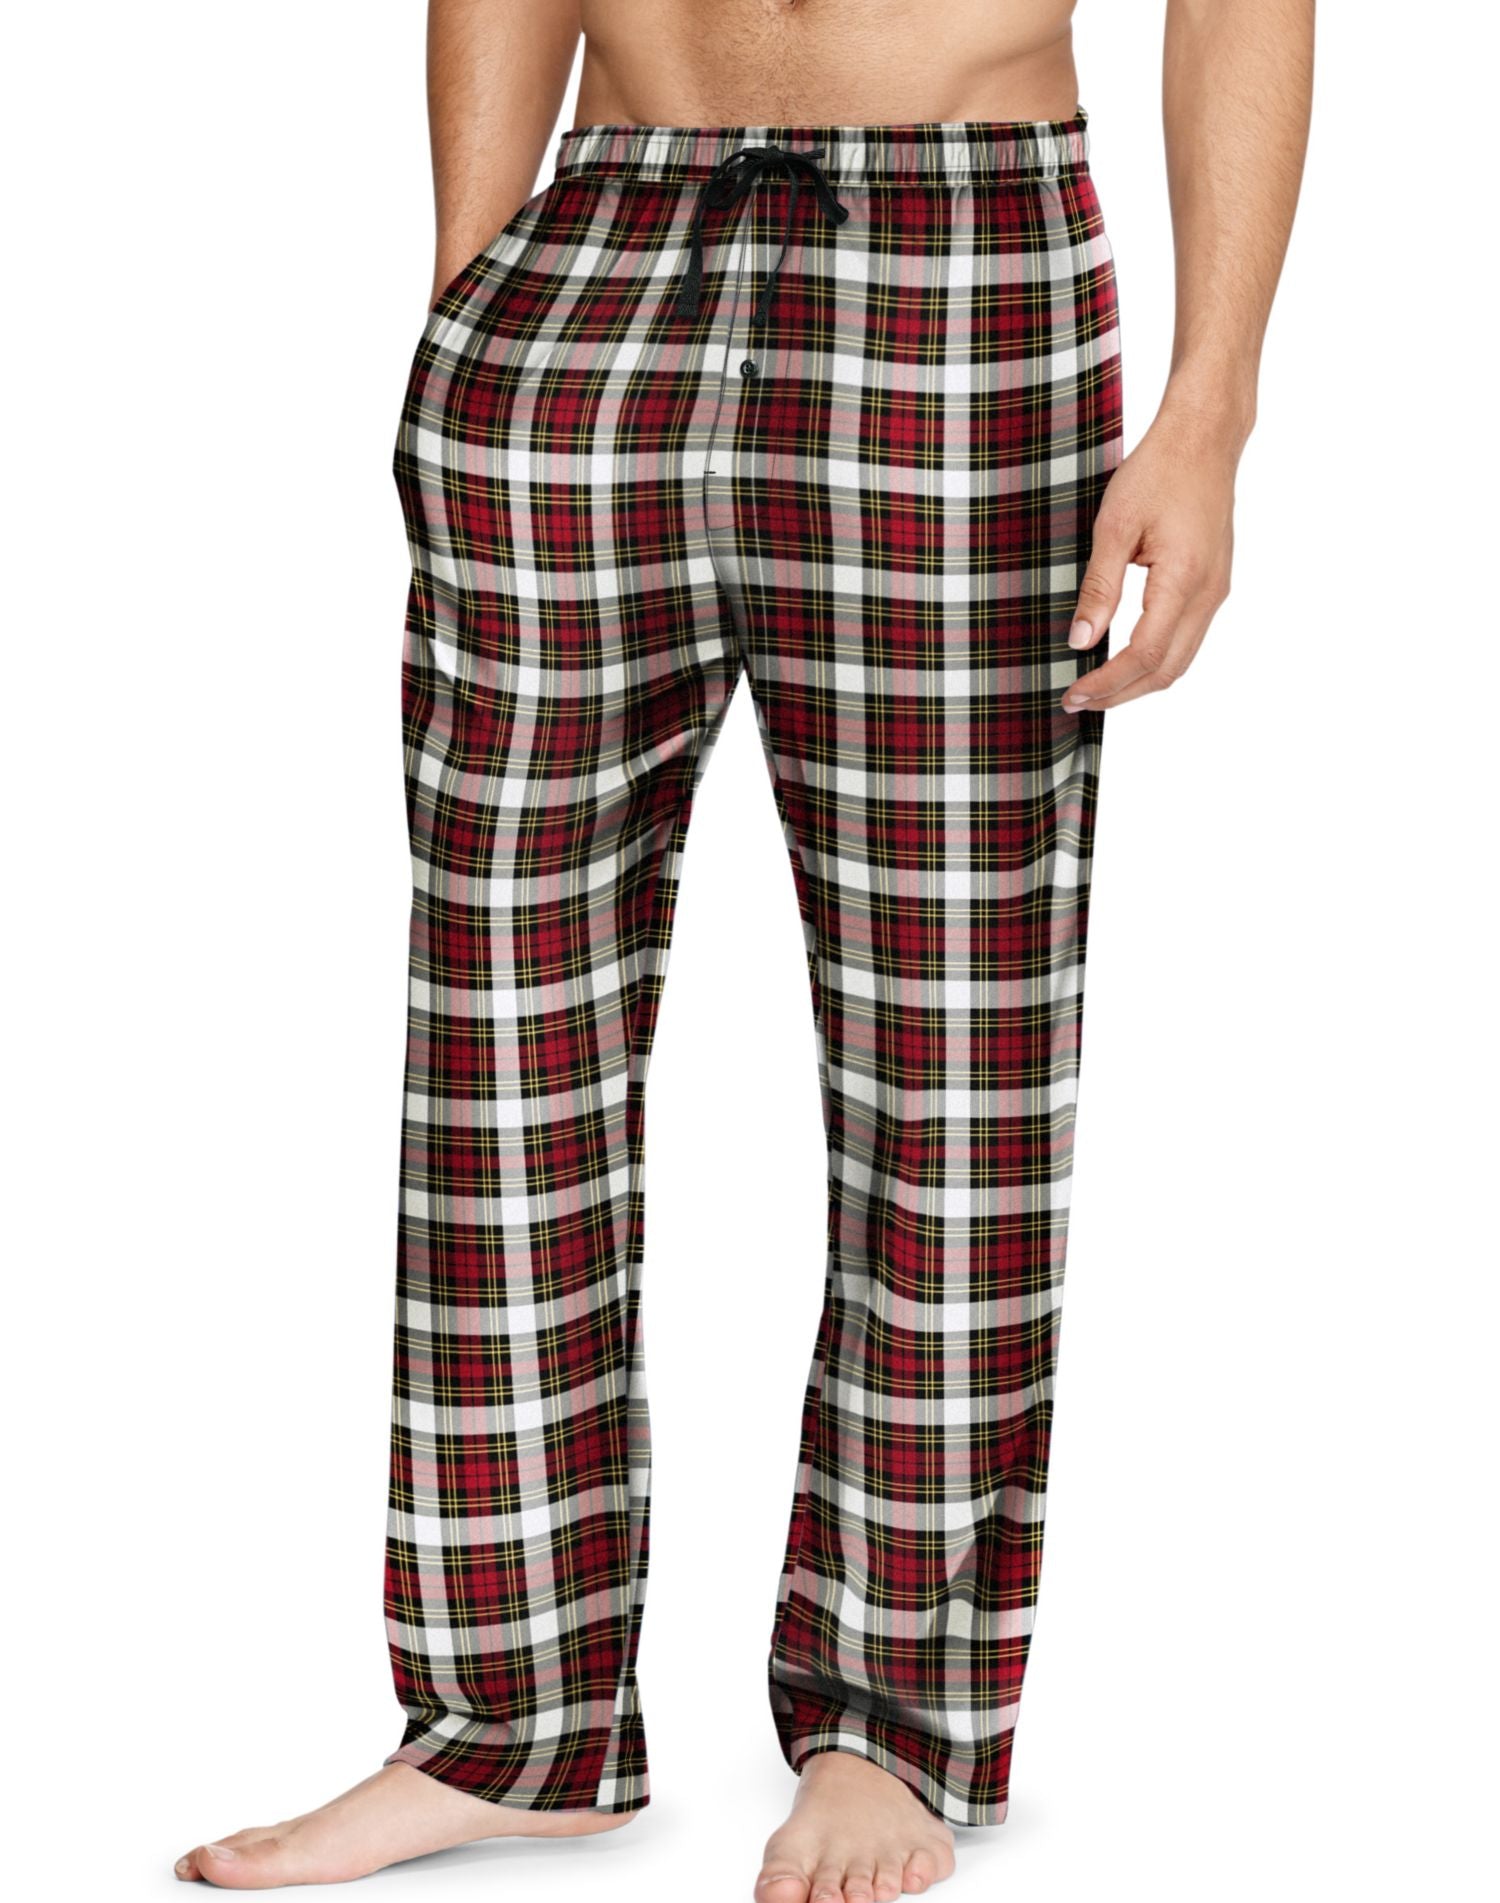 02006/02006X - Hanes Men`s Flannel Pants with Comfort Flex Waistband